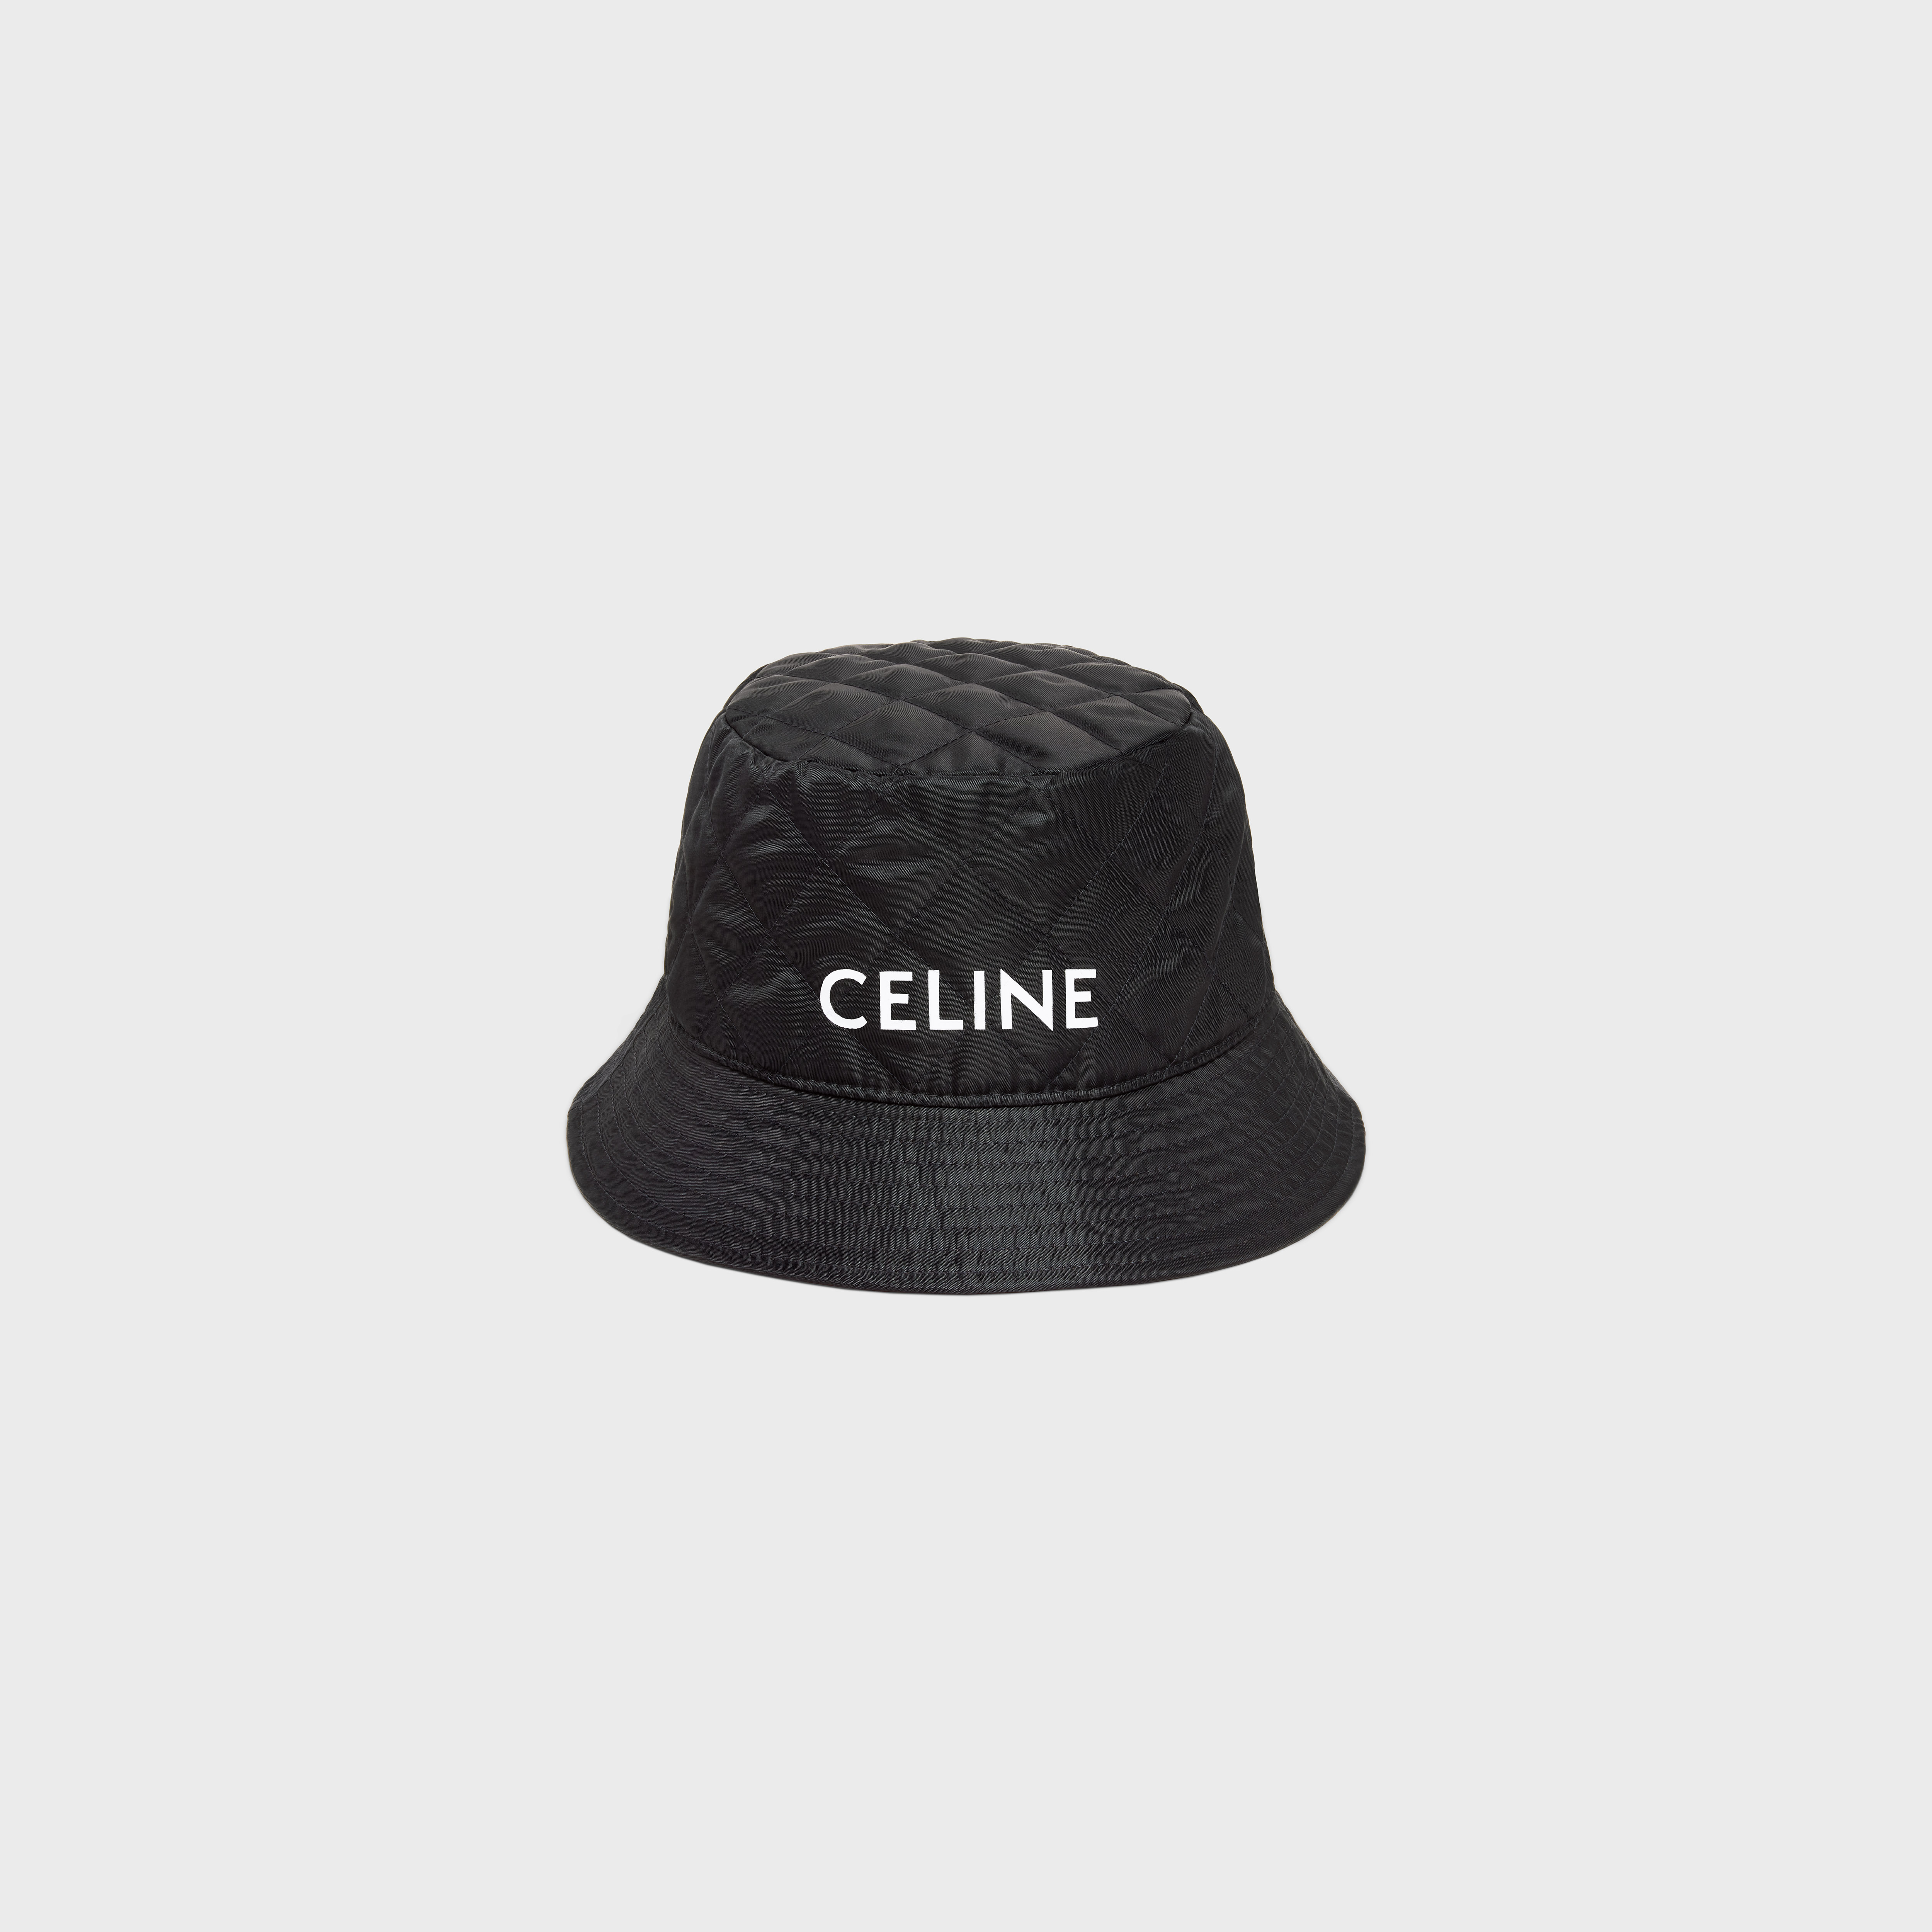 CELINE男士立即选购配饰帽子_CELINE思琳中国官方网站_帽子款式图片 